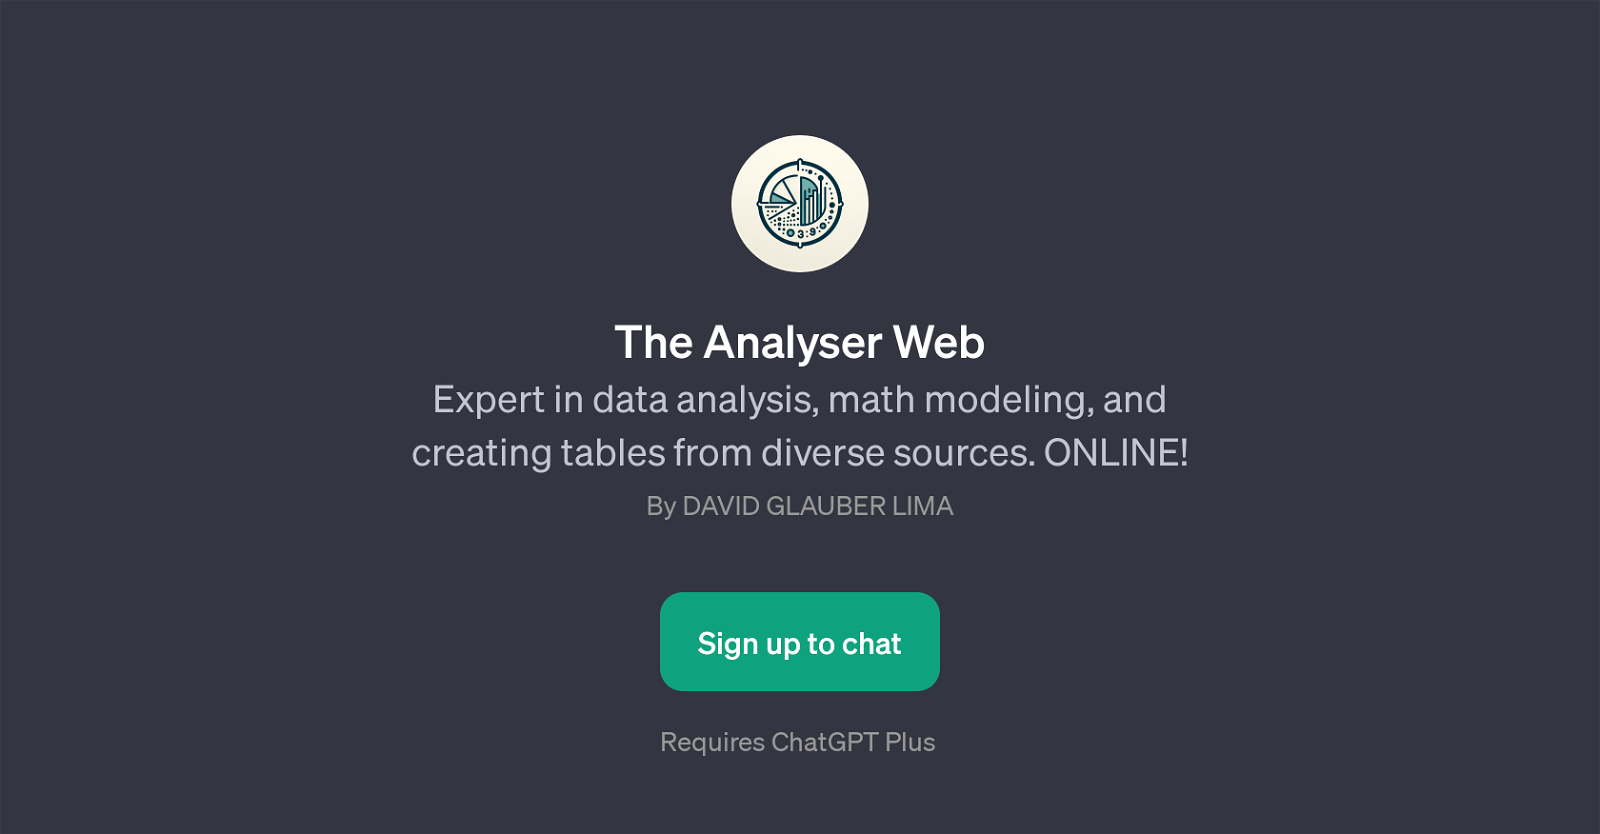 The Analyser Web website